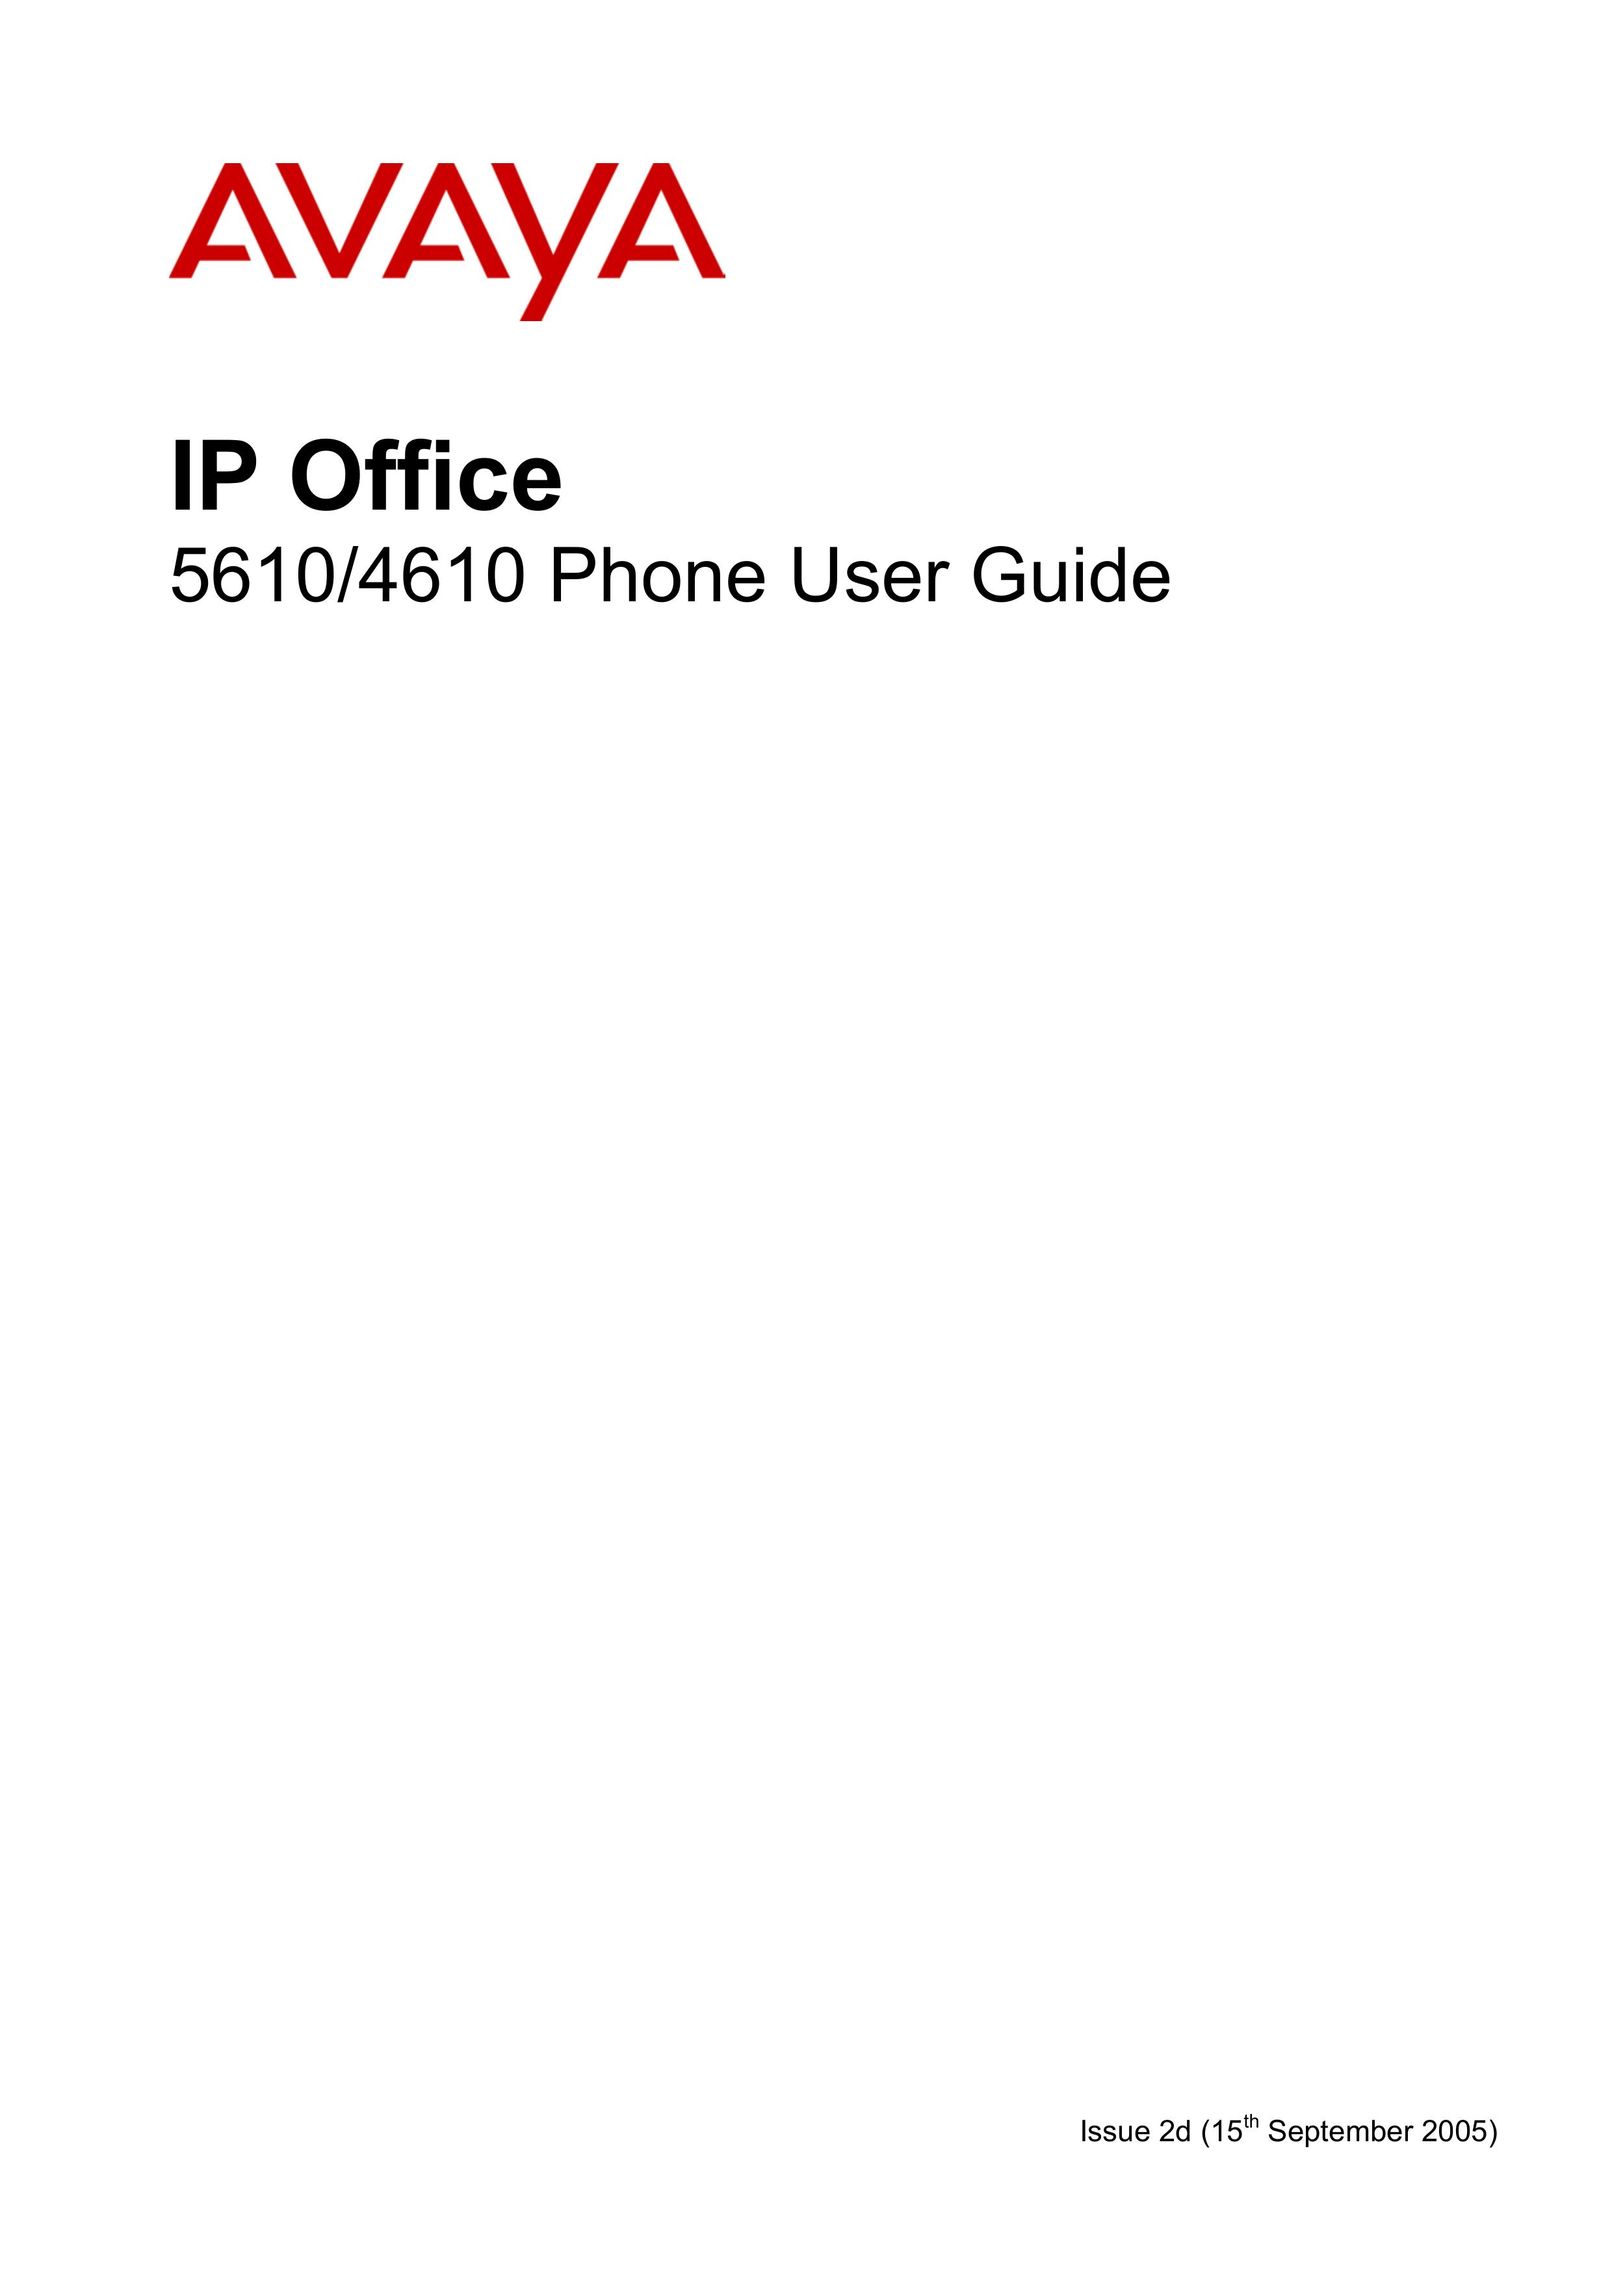 Avaya 4610 Telephone User Manual